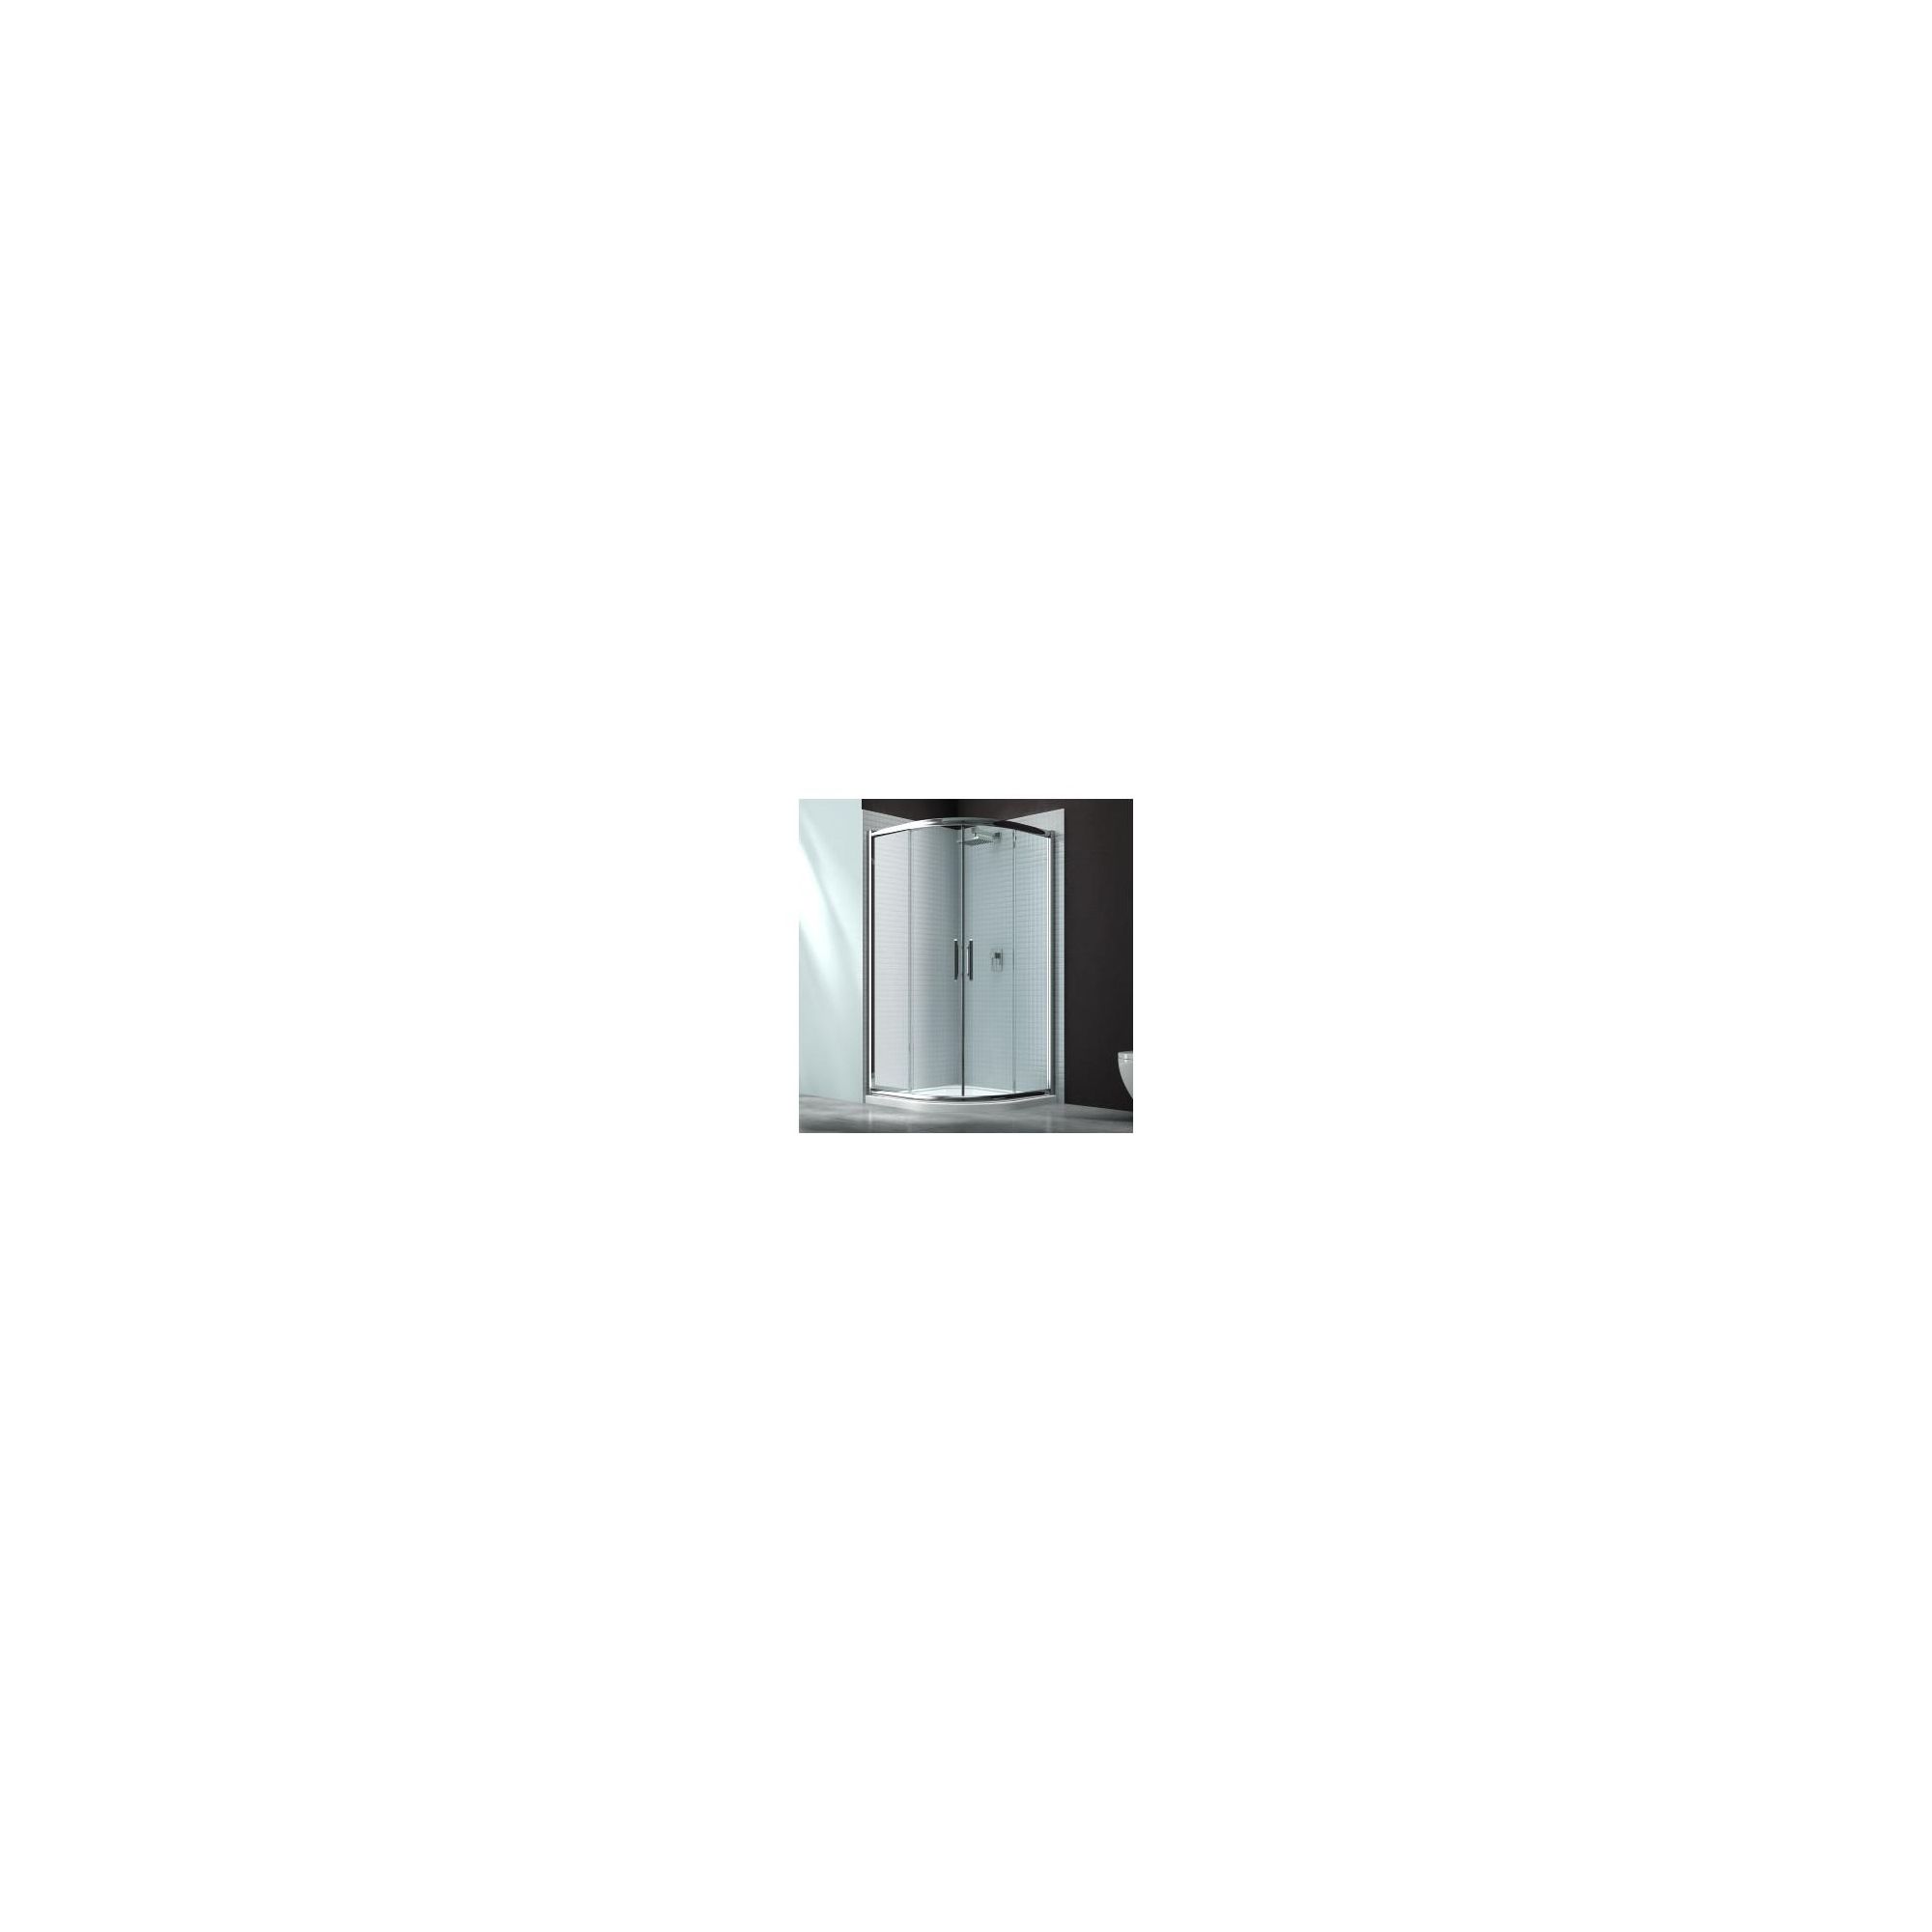 Merlyn Series 6 Double Quadrant Shower Door, 900mm x 900mm, Chrome Frame, 6mm Glass at Tesco Direct